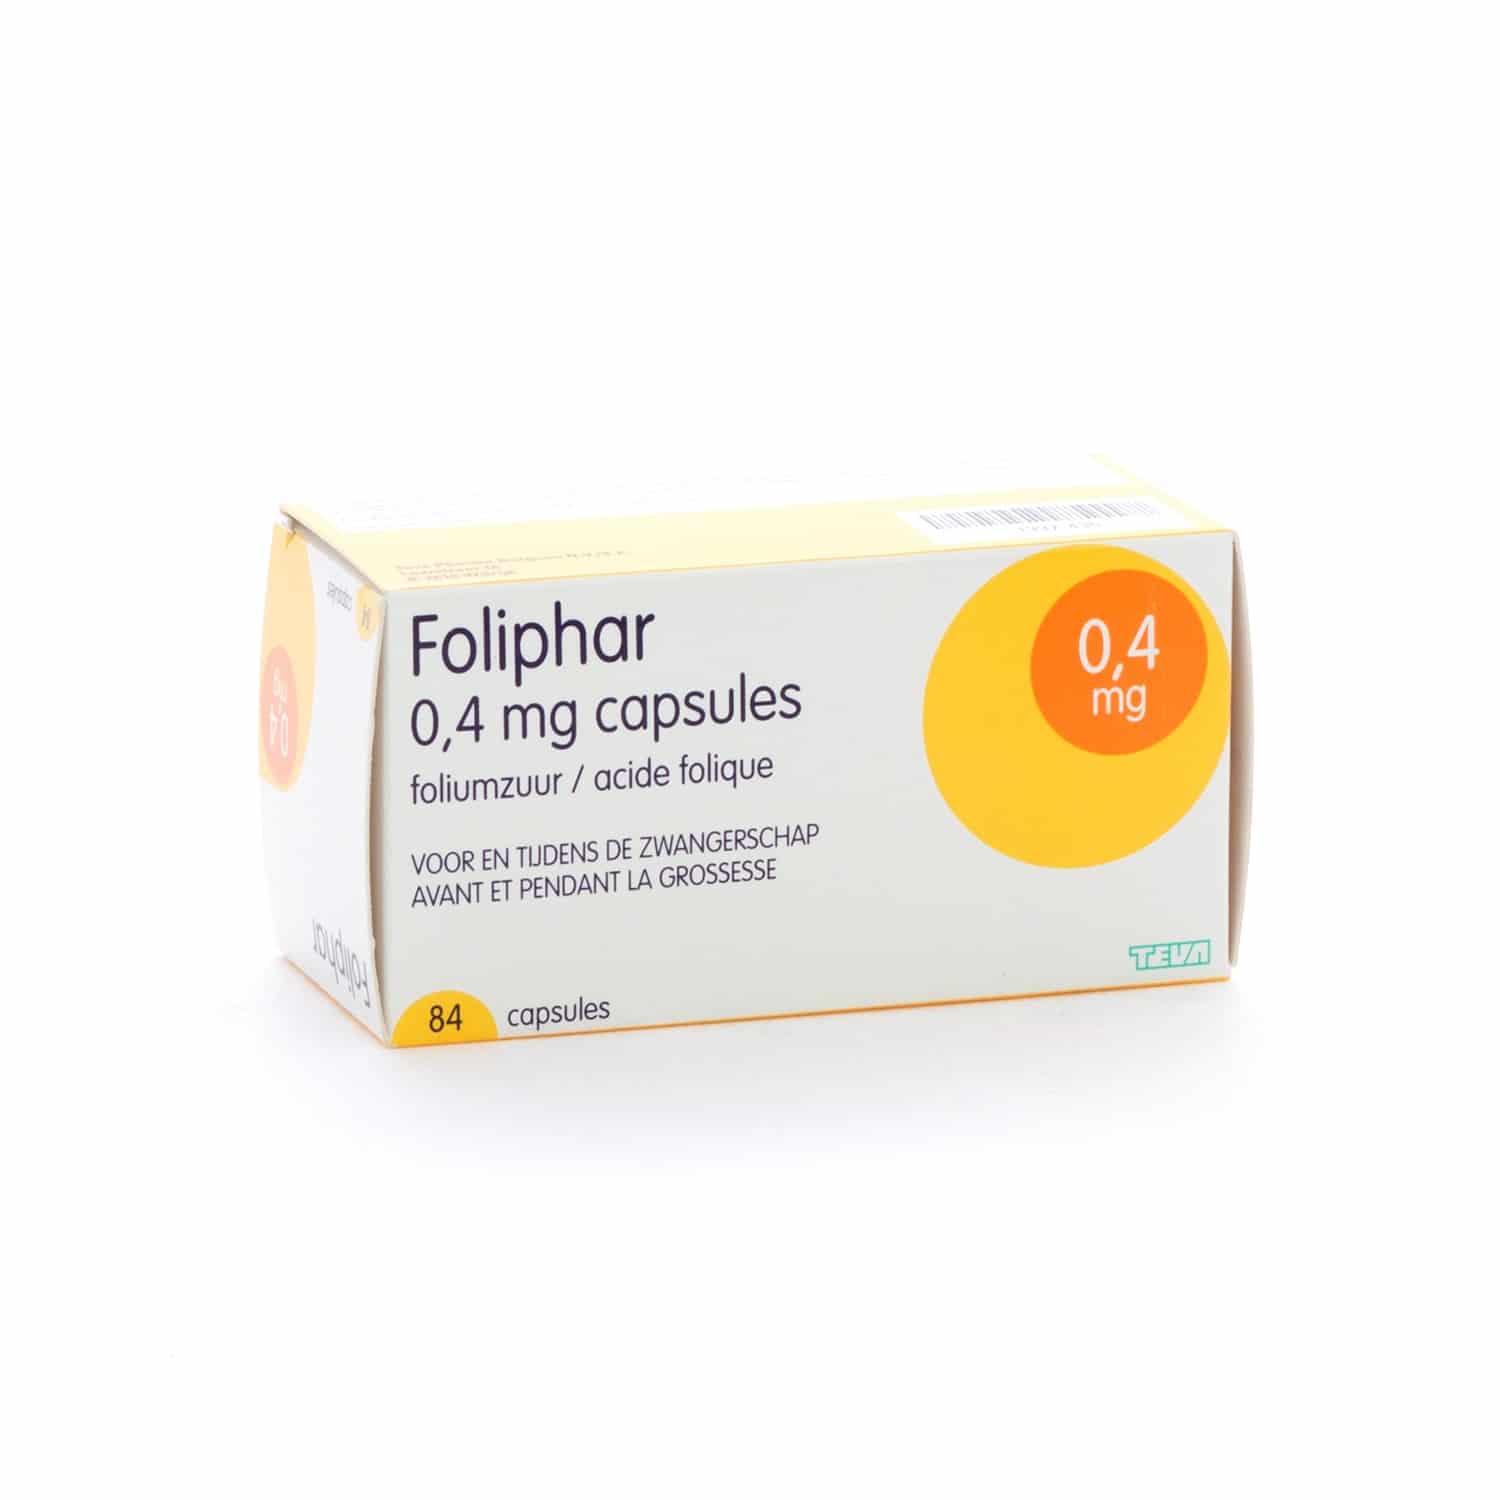 Foliphar 0.4 mg